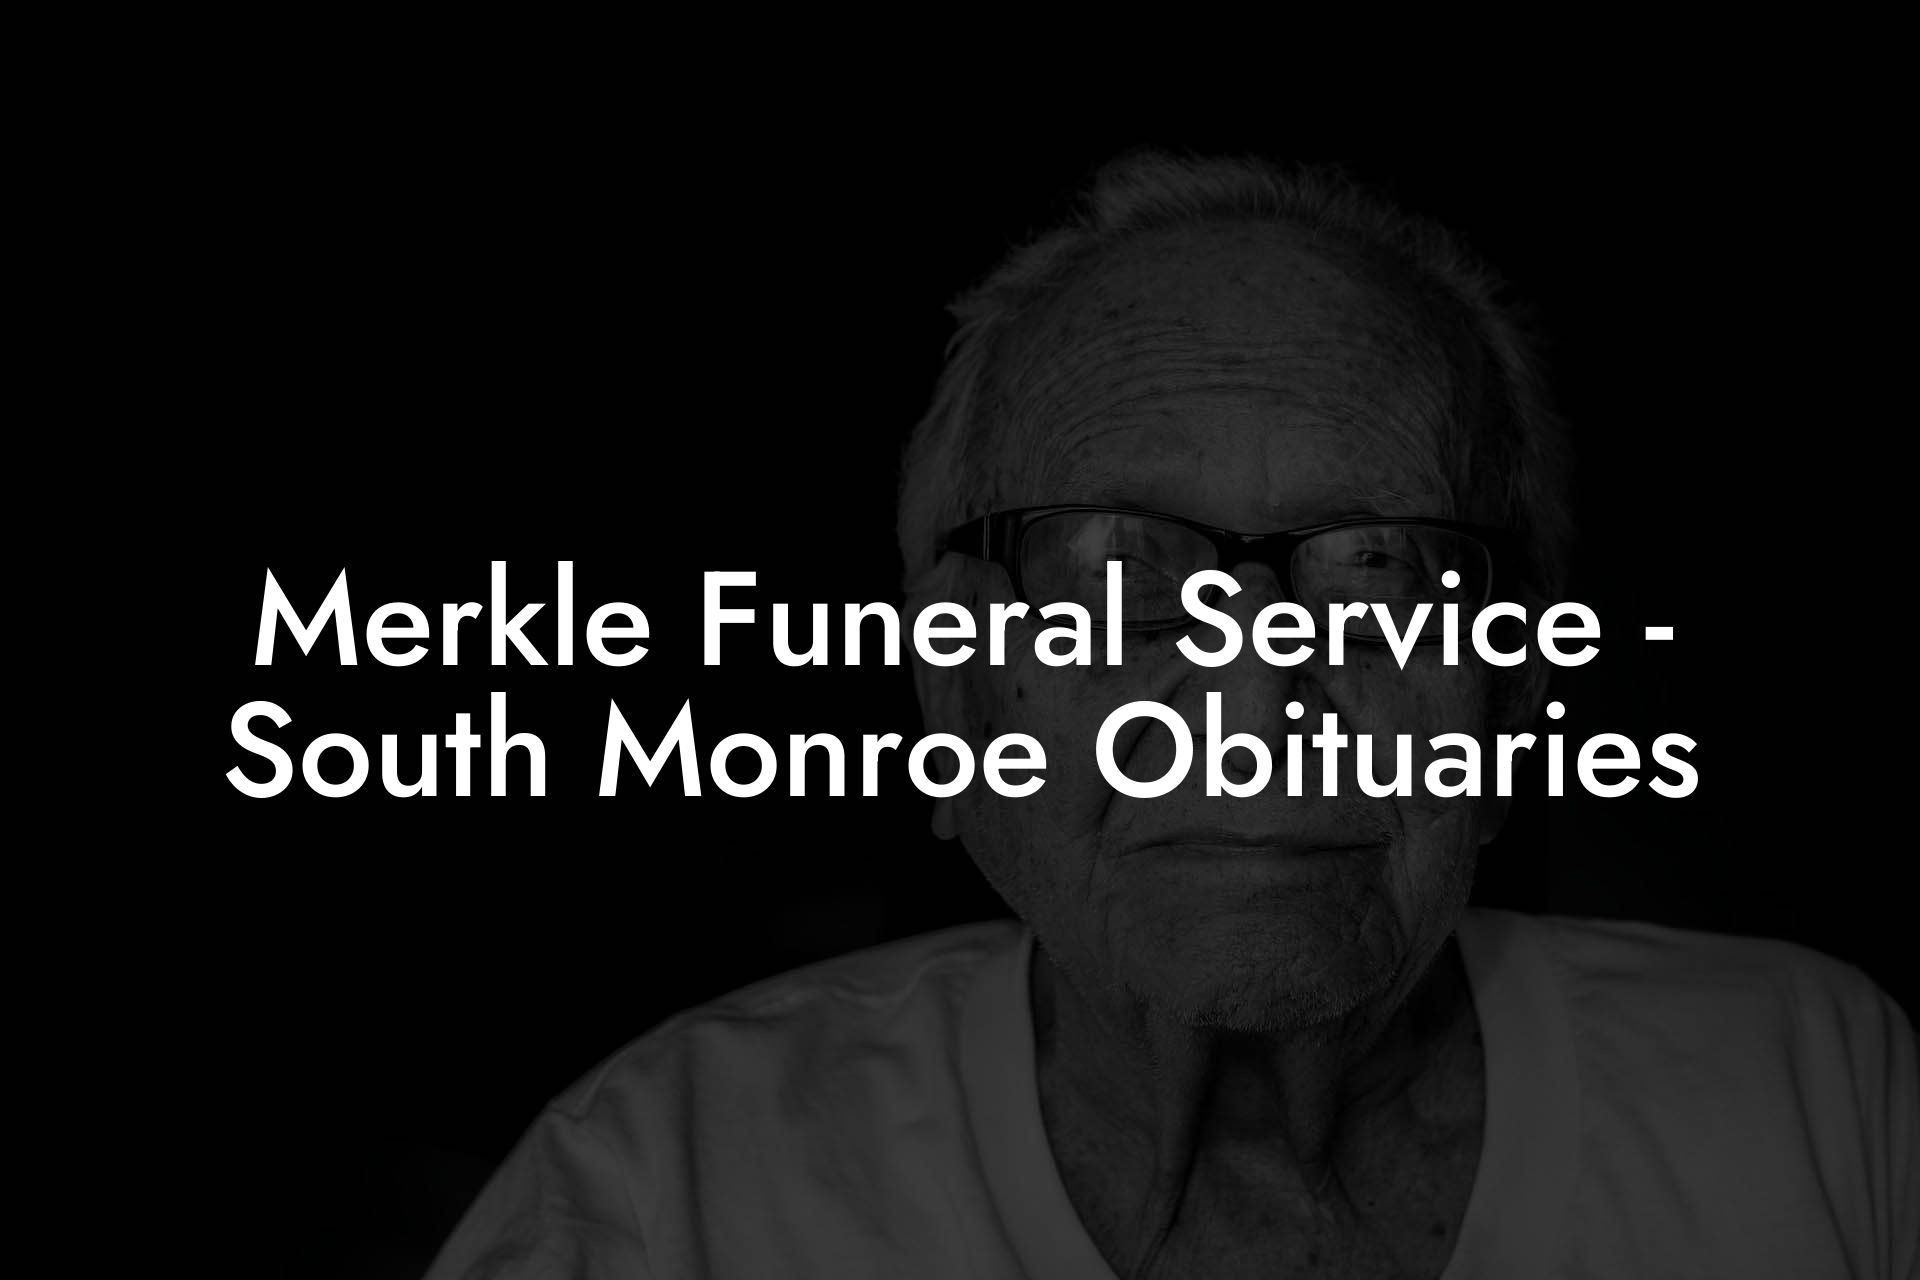 Merkle Funeral Service, South Monroe Obituaries